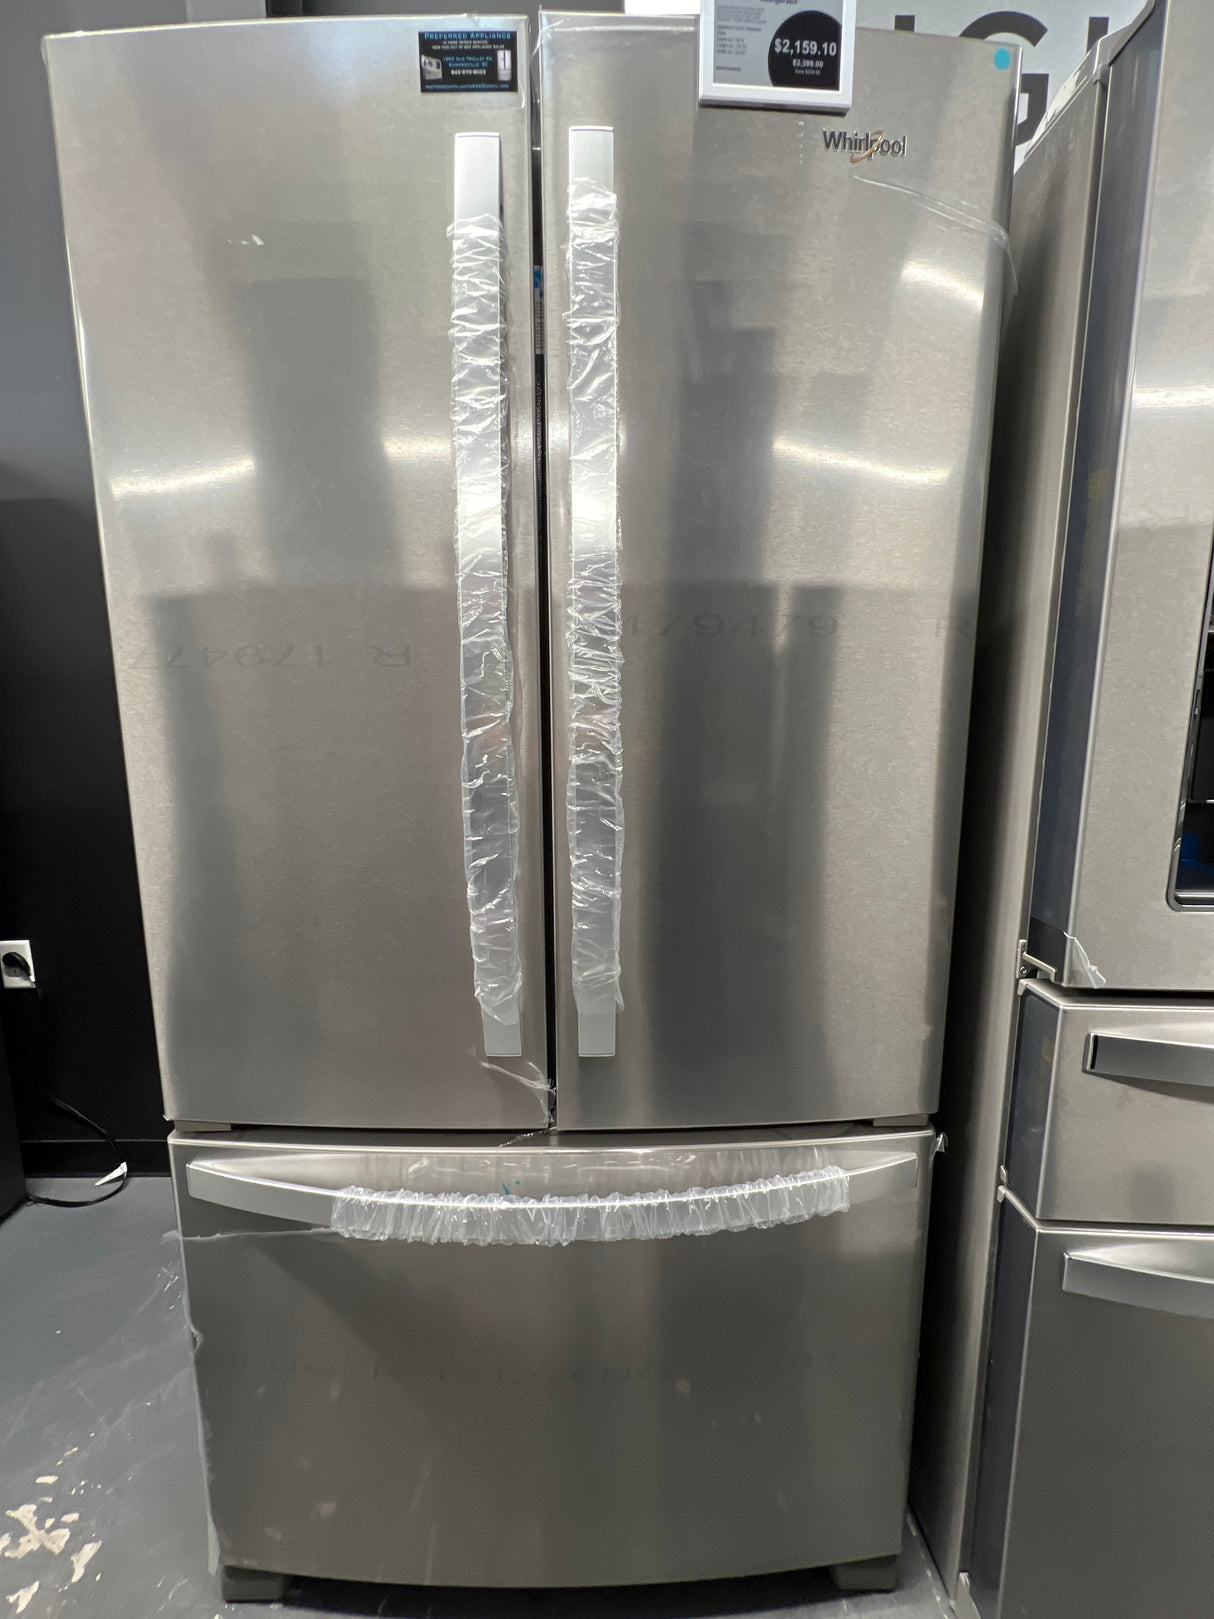 WRF535SWHZ07 whirlpool, 25.2 ft.³ fingerprint resistant stainless steel French door refrigerator.